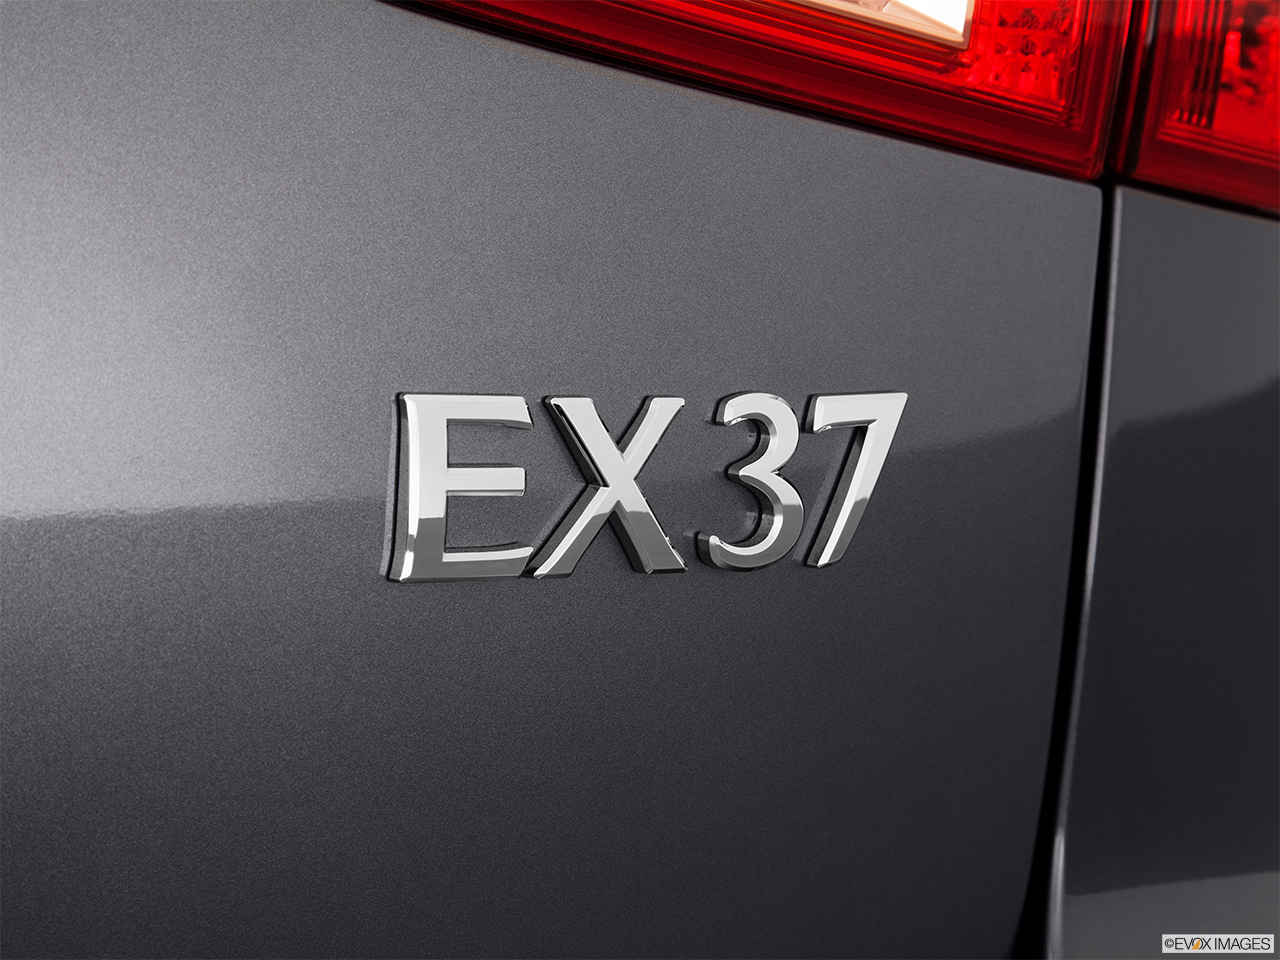 2013 Infiniti EX EX37 Journey AWD Rear model badge/emblem 